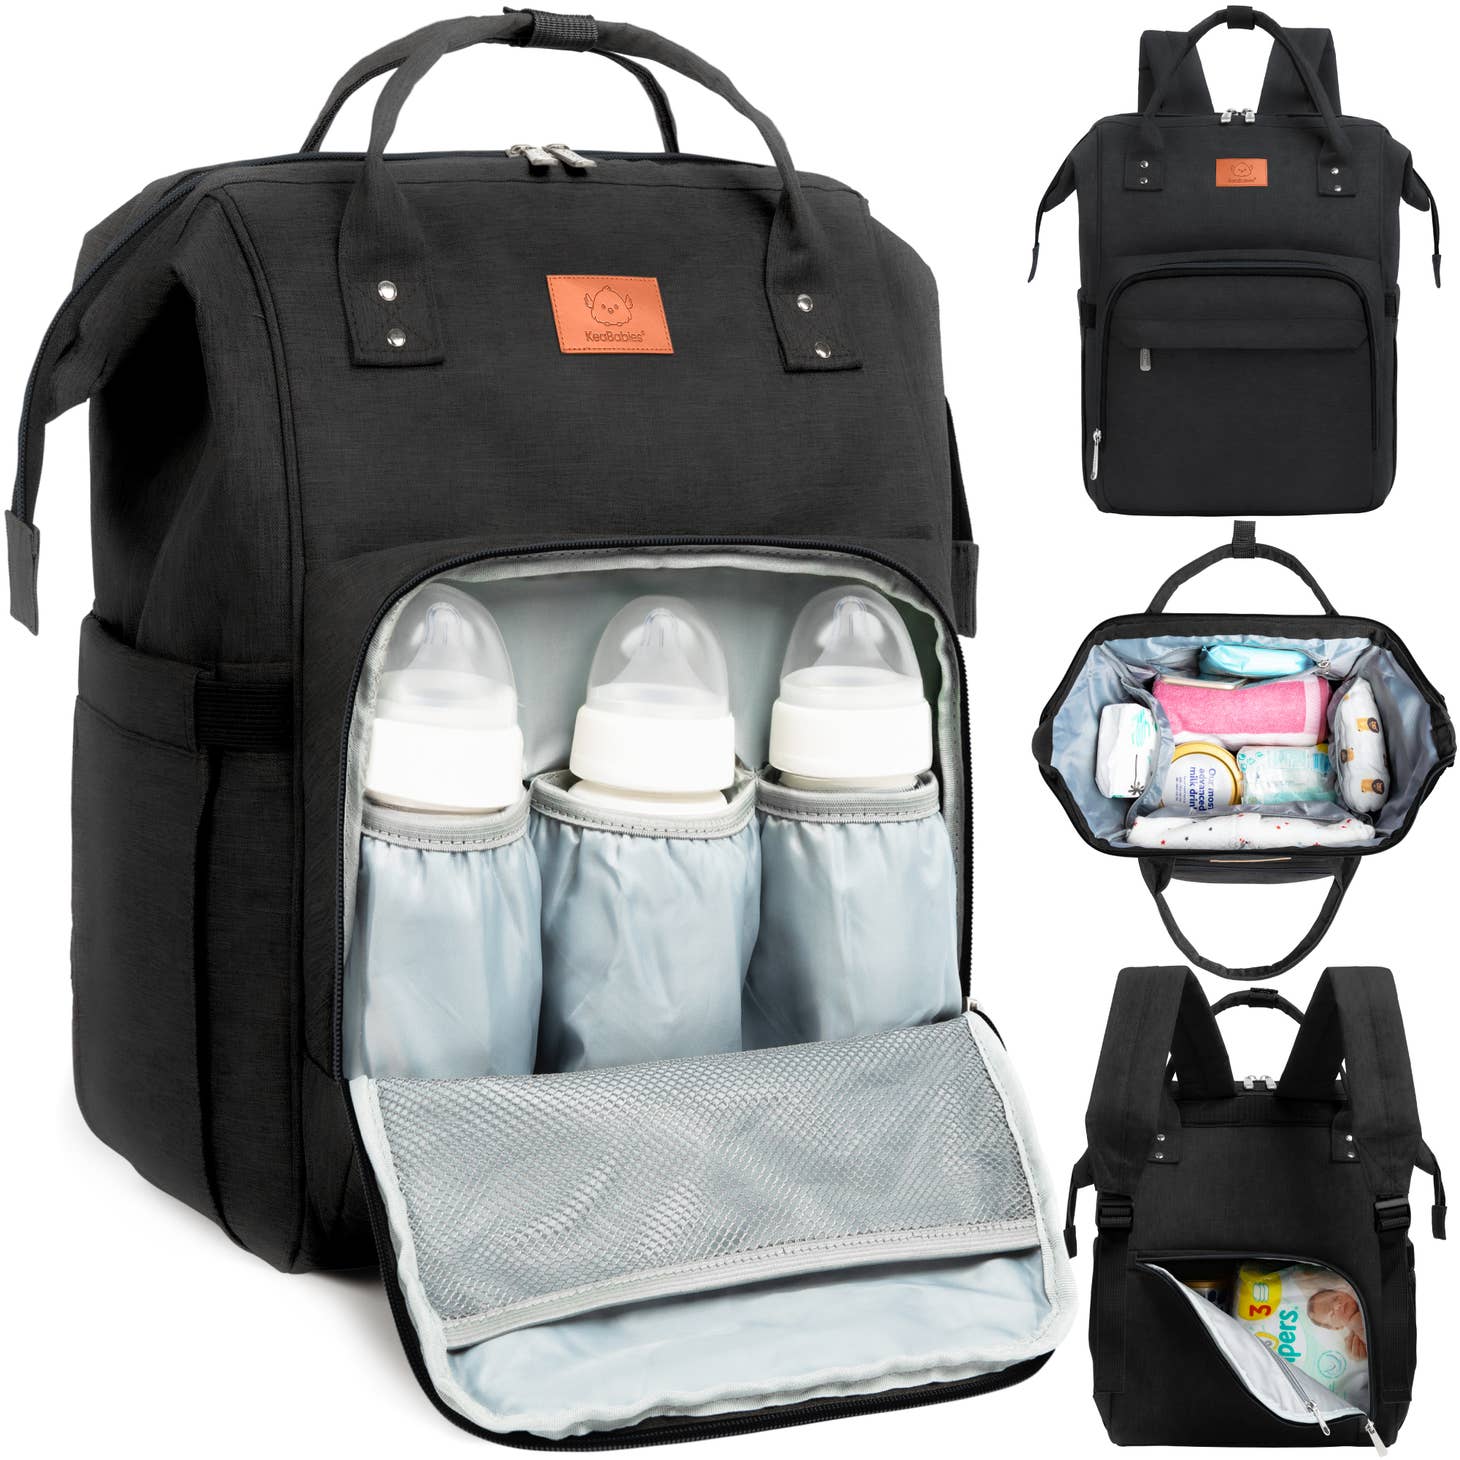 KeaBabies Original Diaper Bag Backpack with Changing Pad - Trendy Black